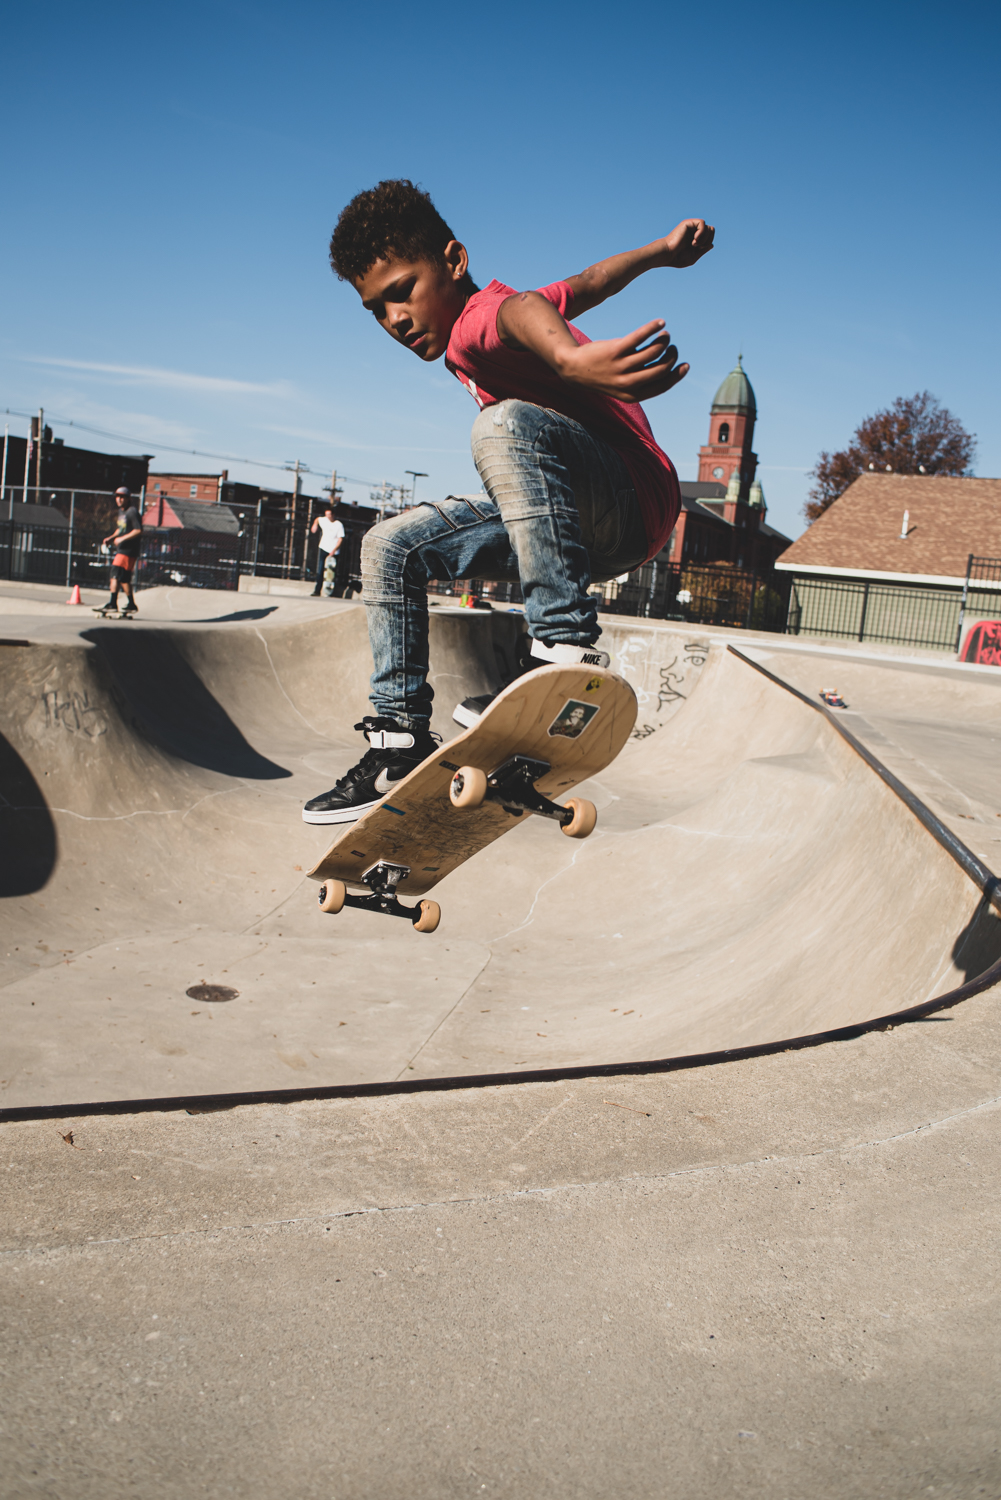 Skateboarder by Garrick Hoffman Photography